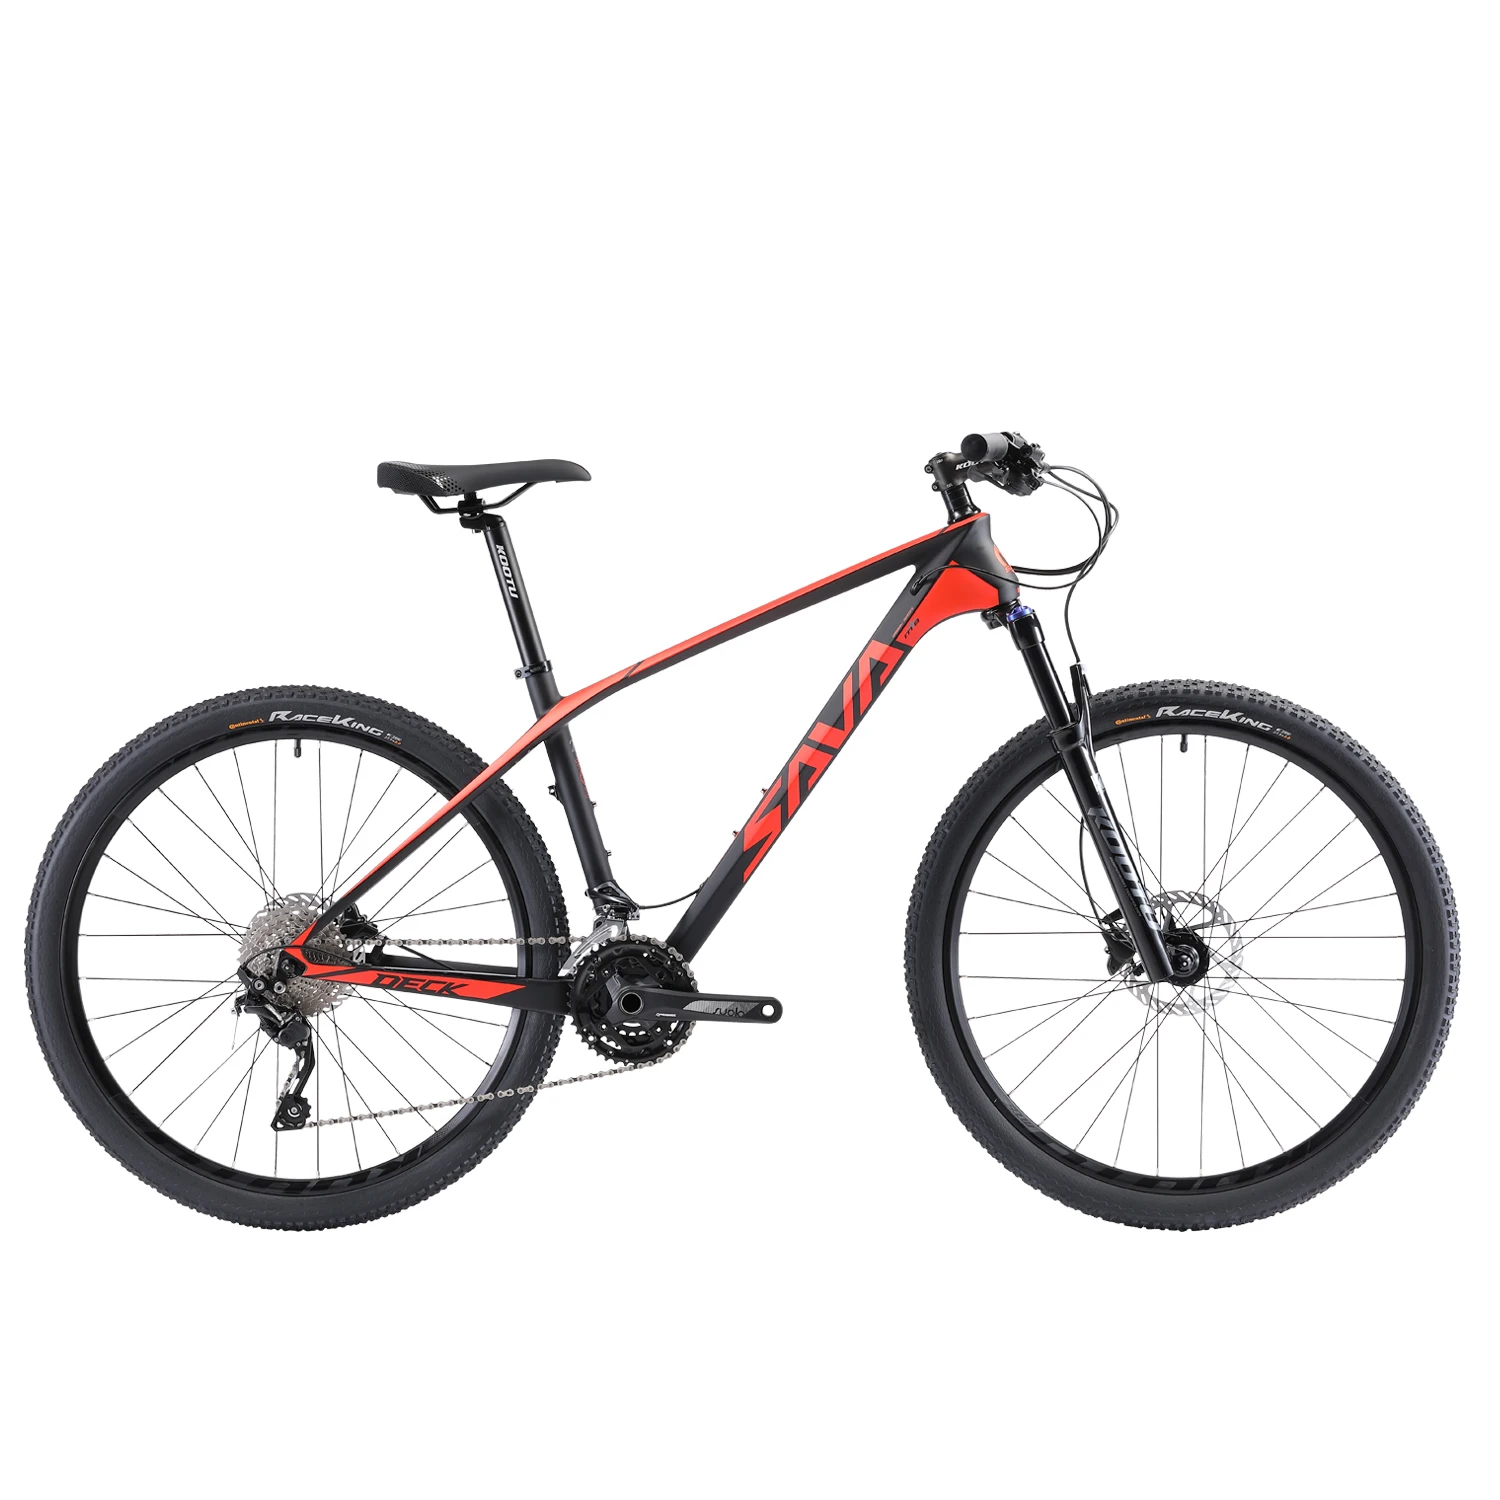 

2021 Popular SAVA DECK 6.0 Mountain Bike 30 Speed 26/ 27.5/ 29 inch Cheap Carbon Fibre Frame Mountain Bicycle mtb bicicleta, Black red/black blue/black white/black yellow